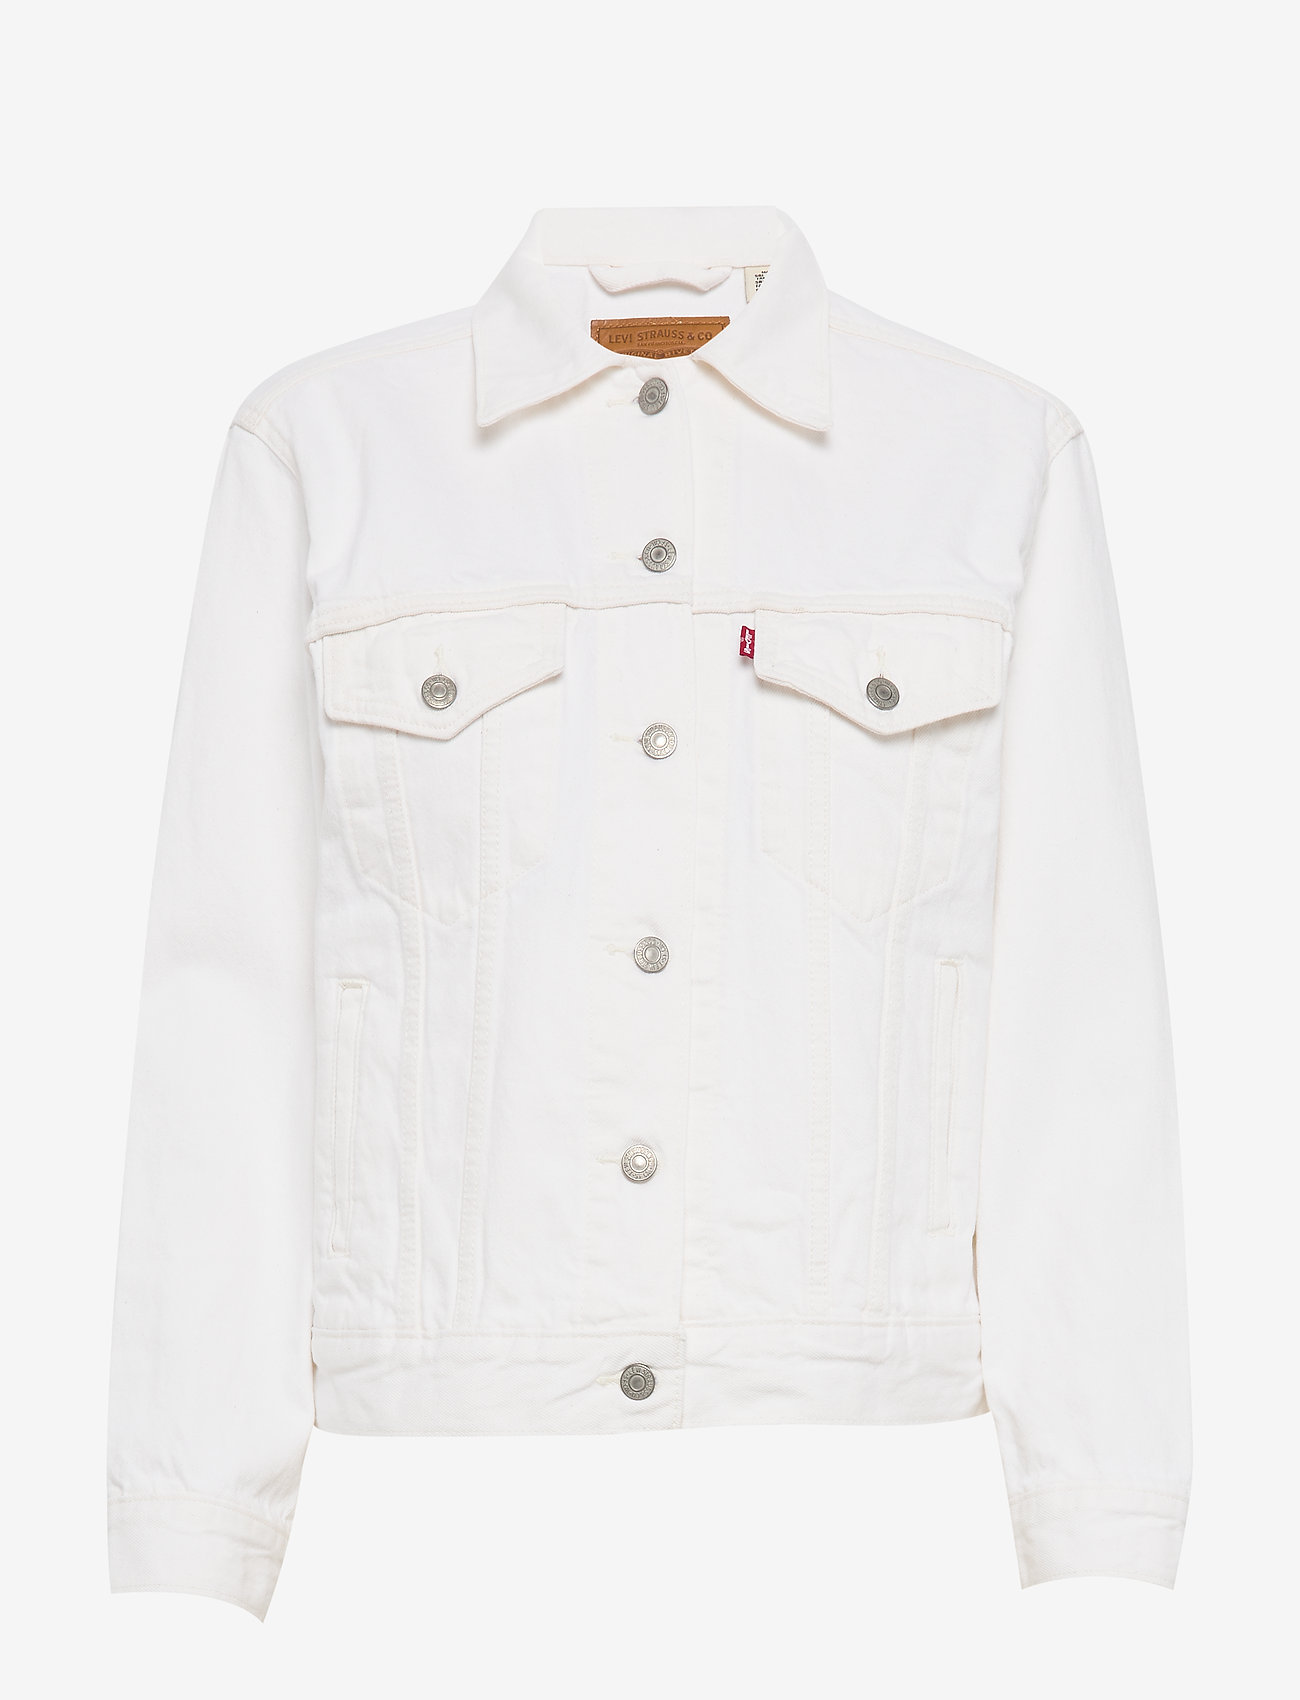 women's levi's white denim jacket